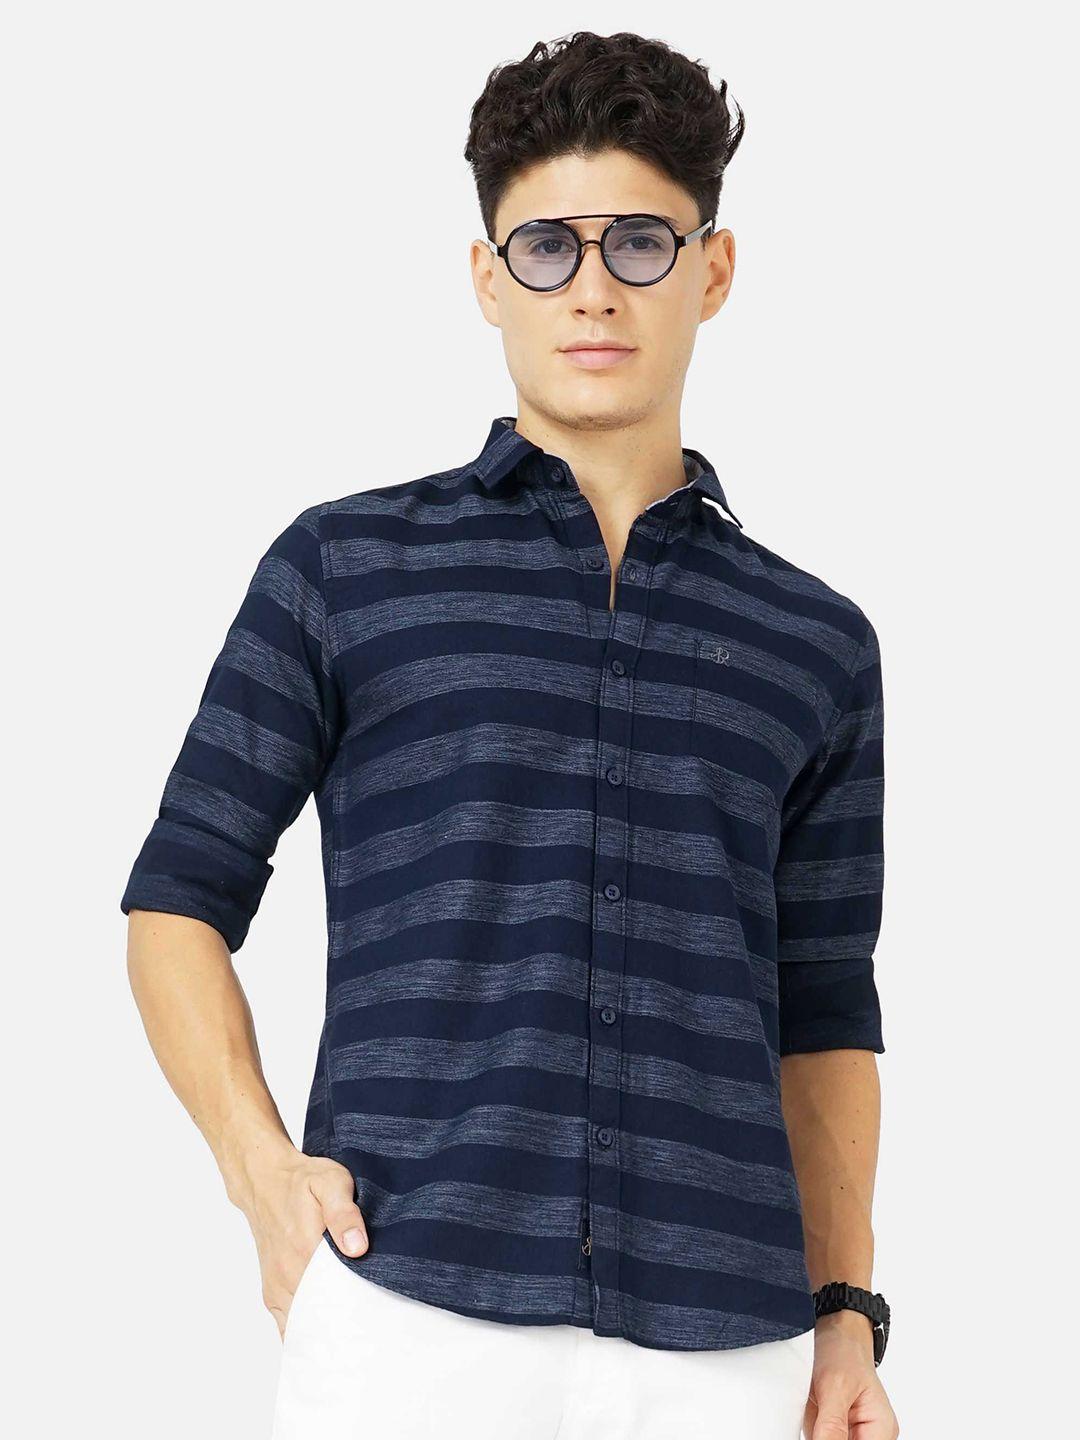 soratia horizontal stripes cotton casual shirt